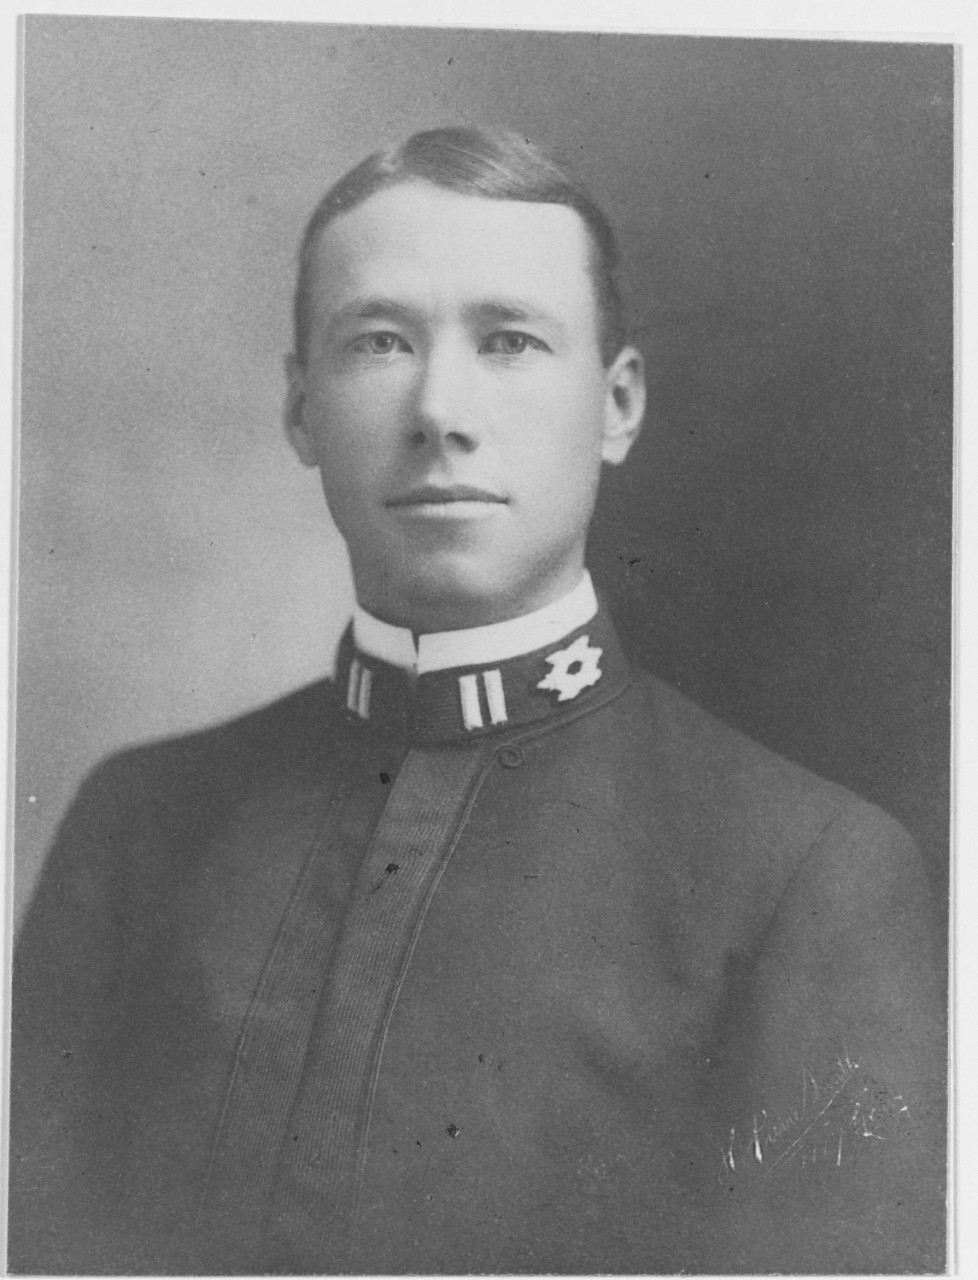 Lieutenant Joseph H. Rockwell, USN